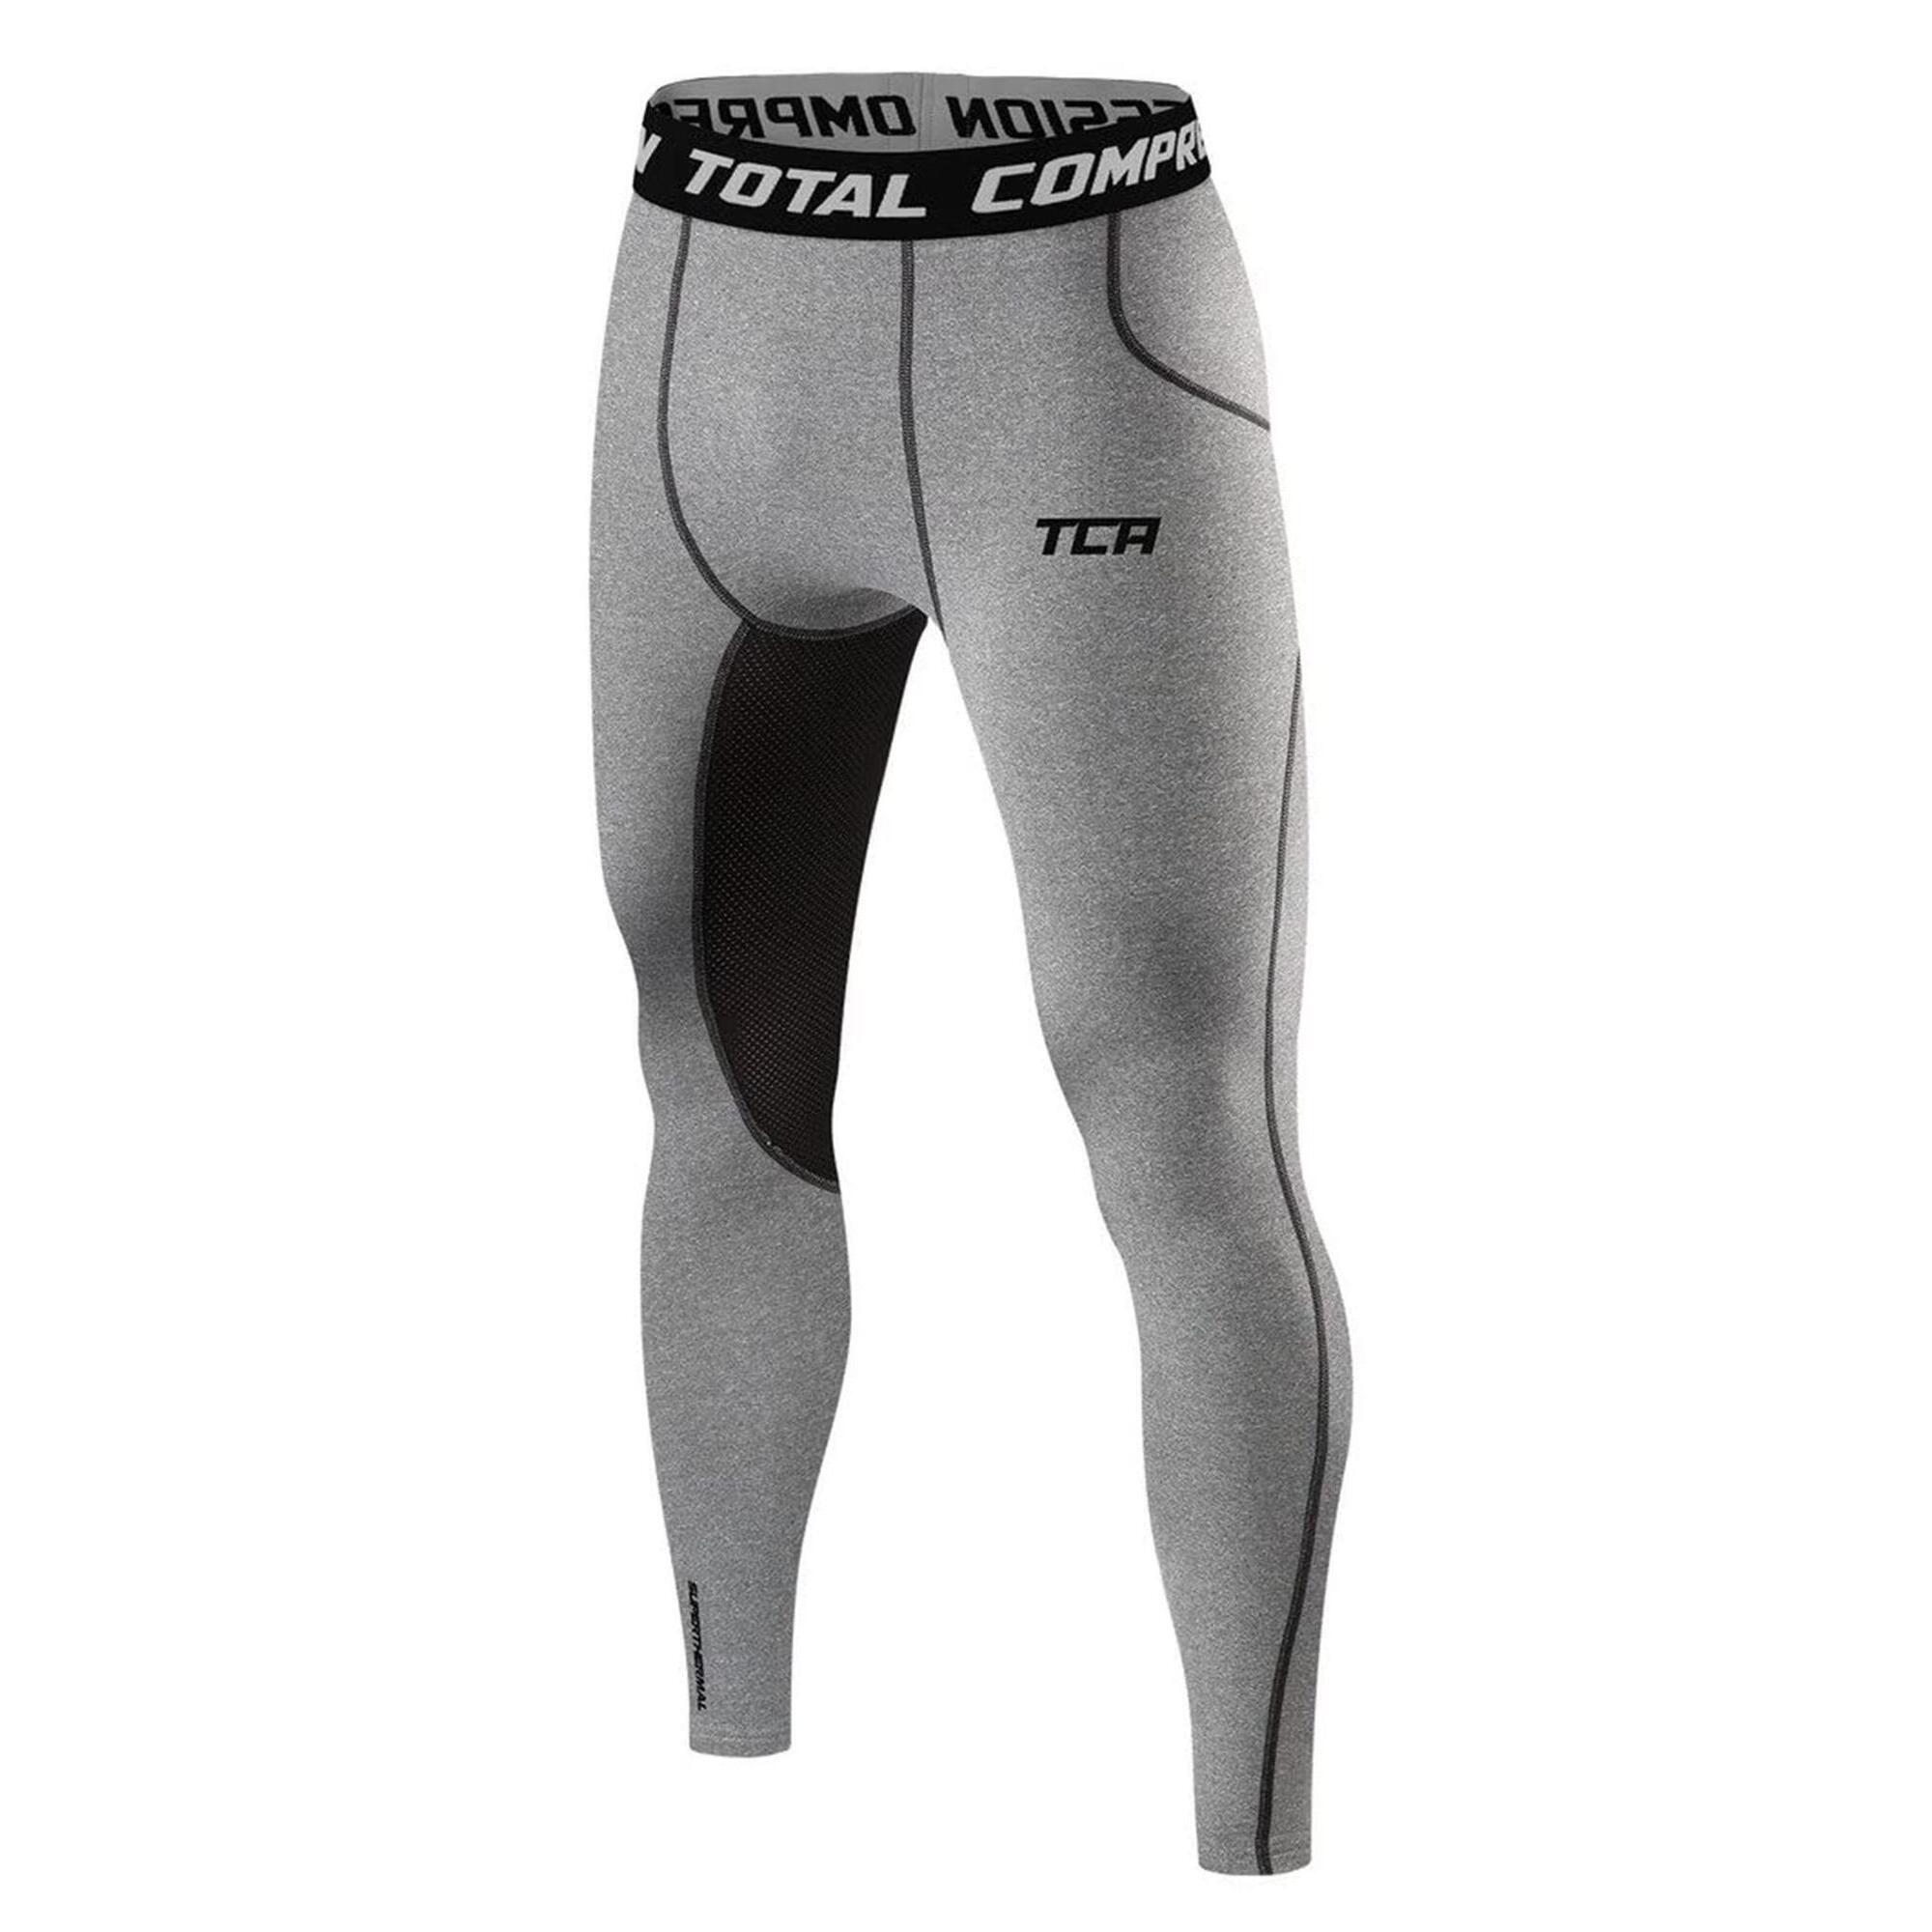 TCA Boys' Super Thermal Compression Leggings - Grey Marl/Black